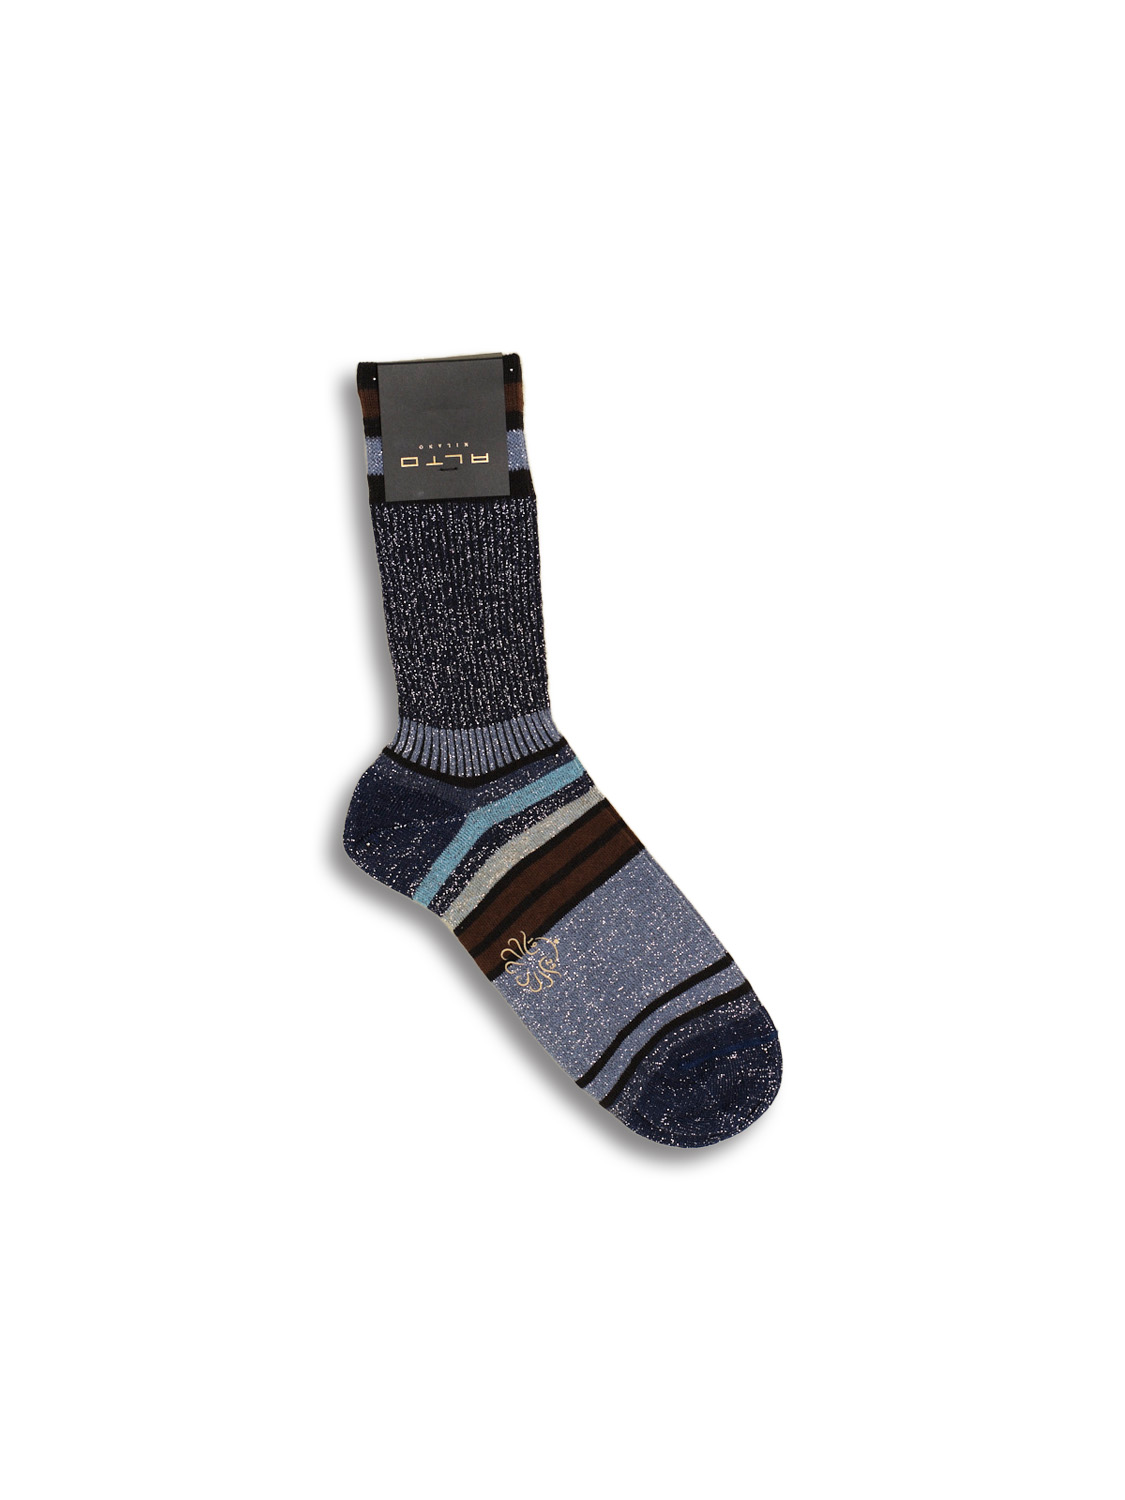 Chapo Corto - Striped socks with glitter threads 